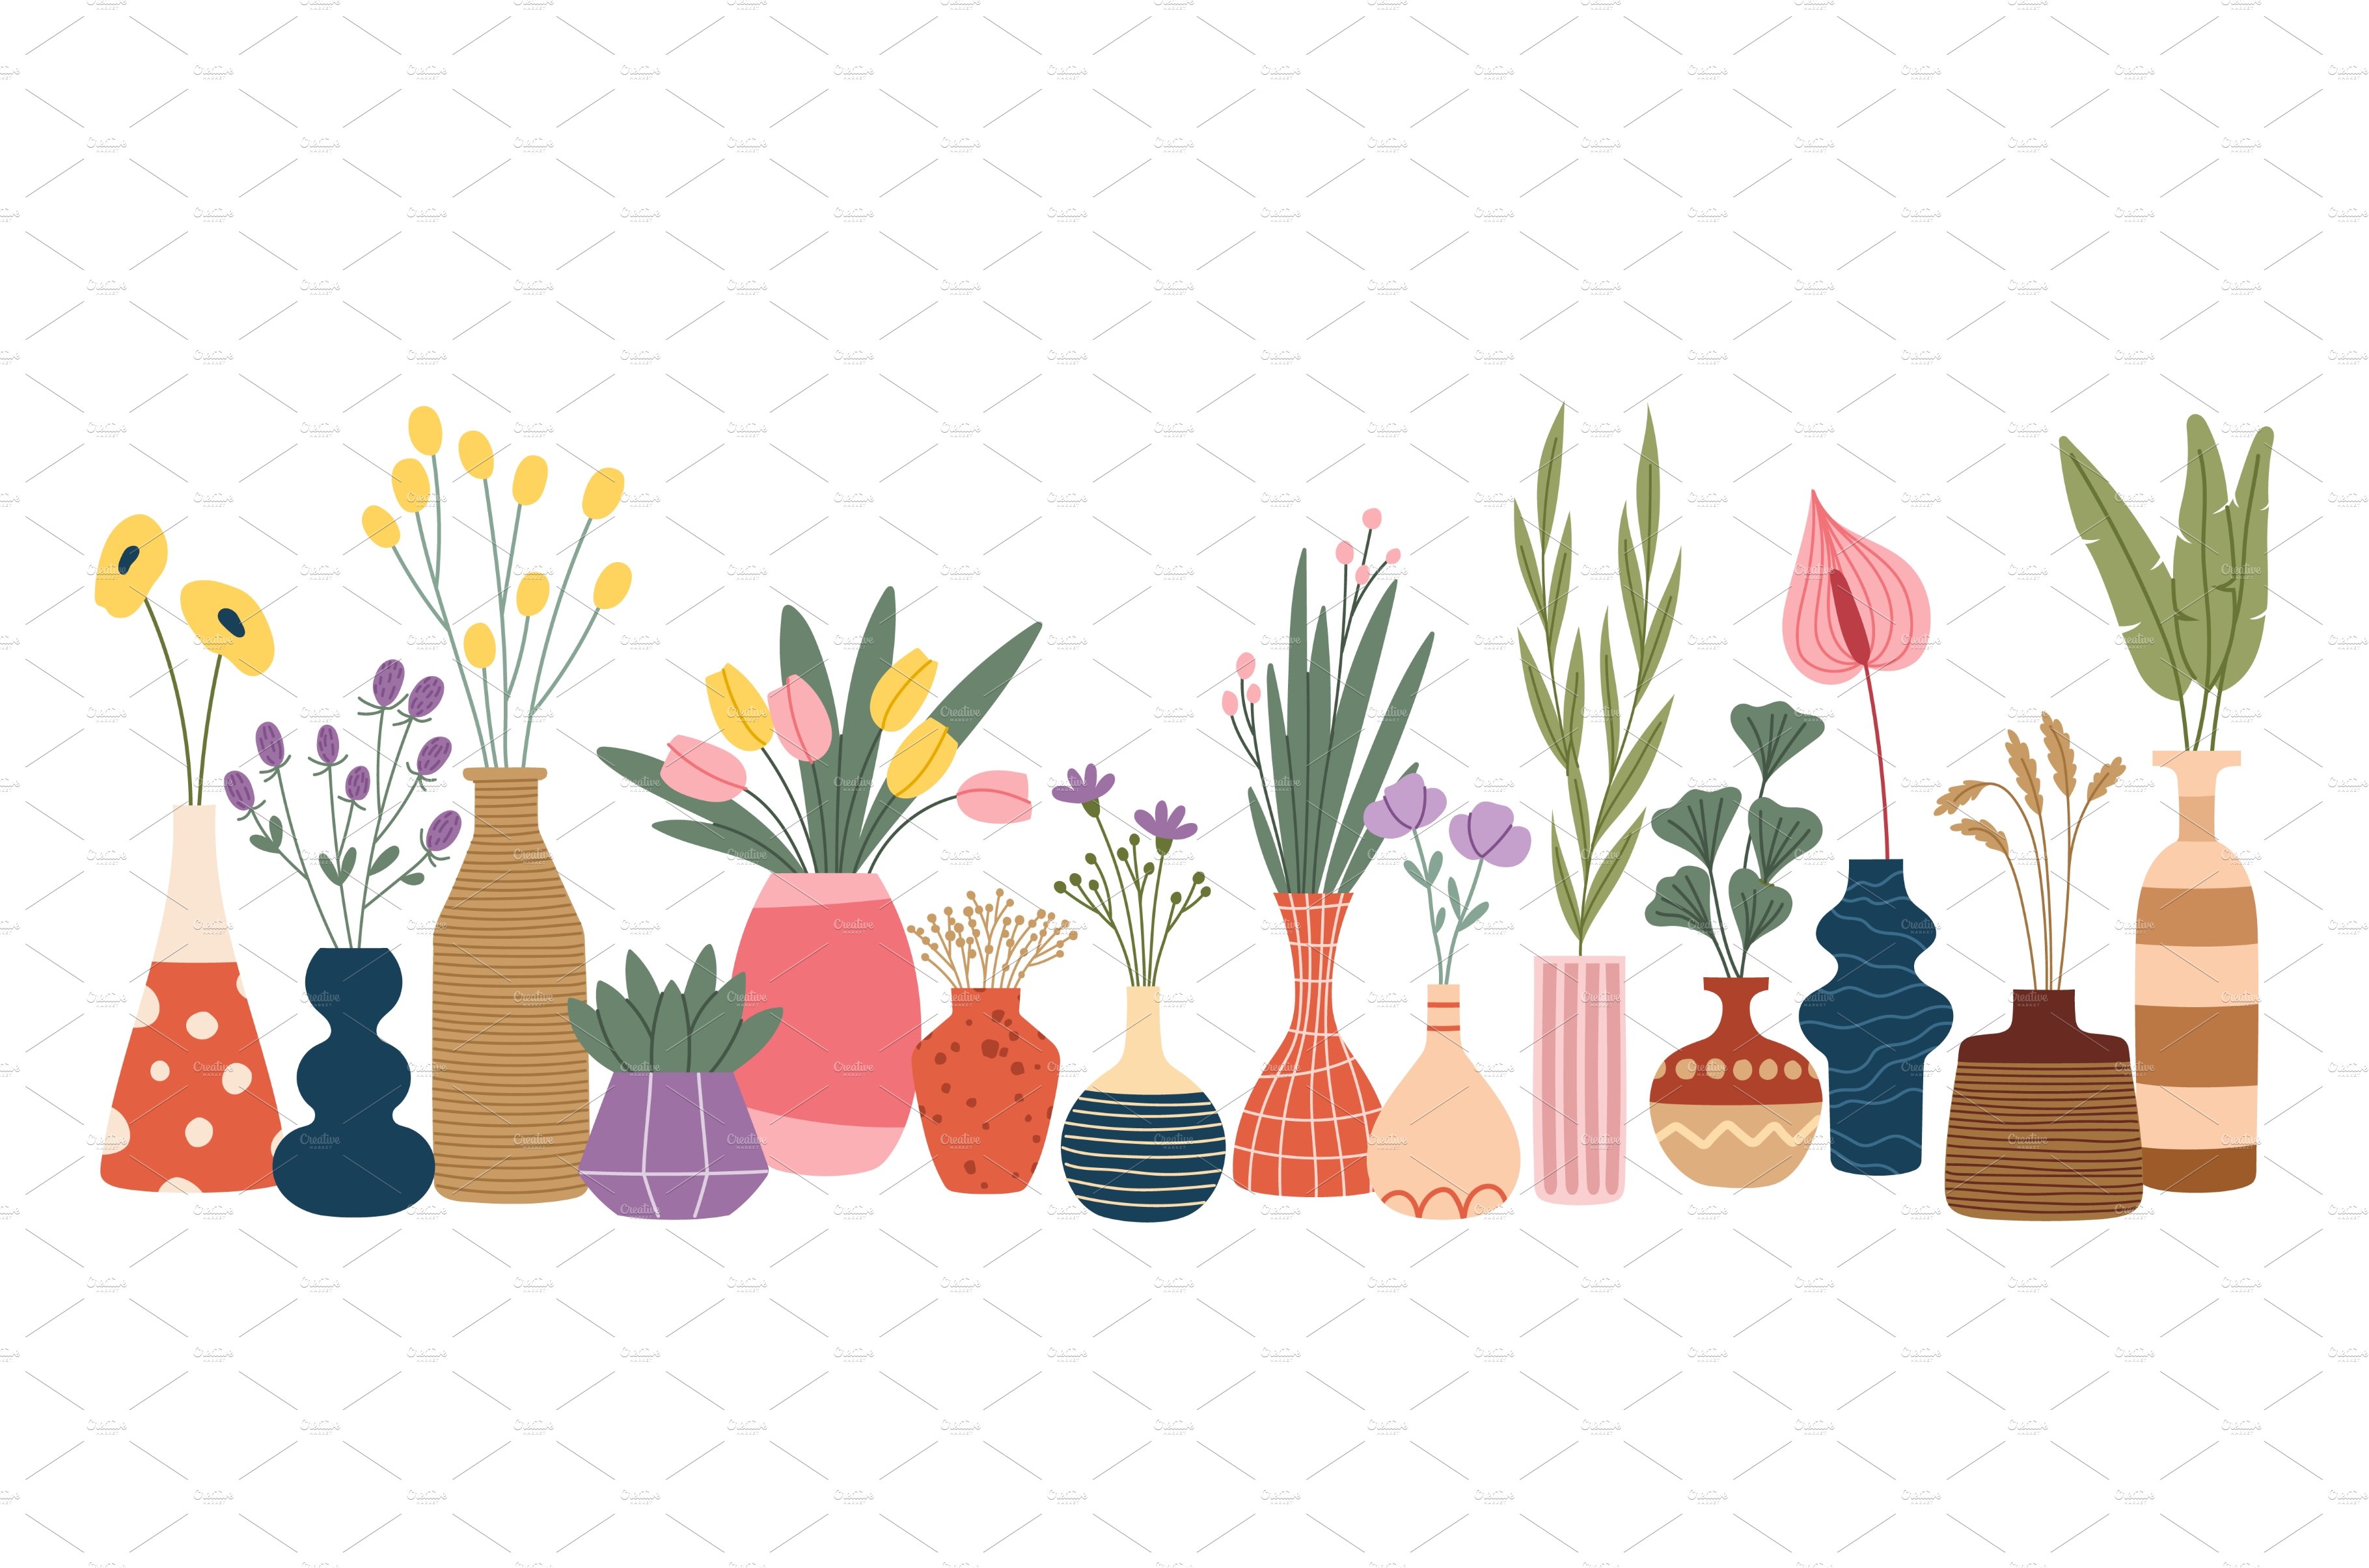 Scandinavian flower vases, pots cover image.